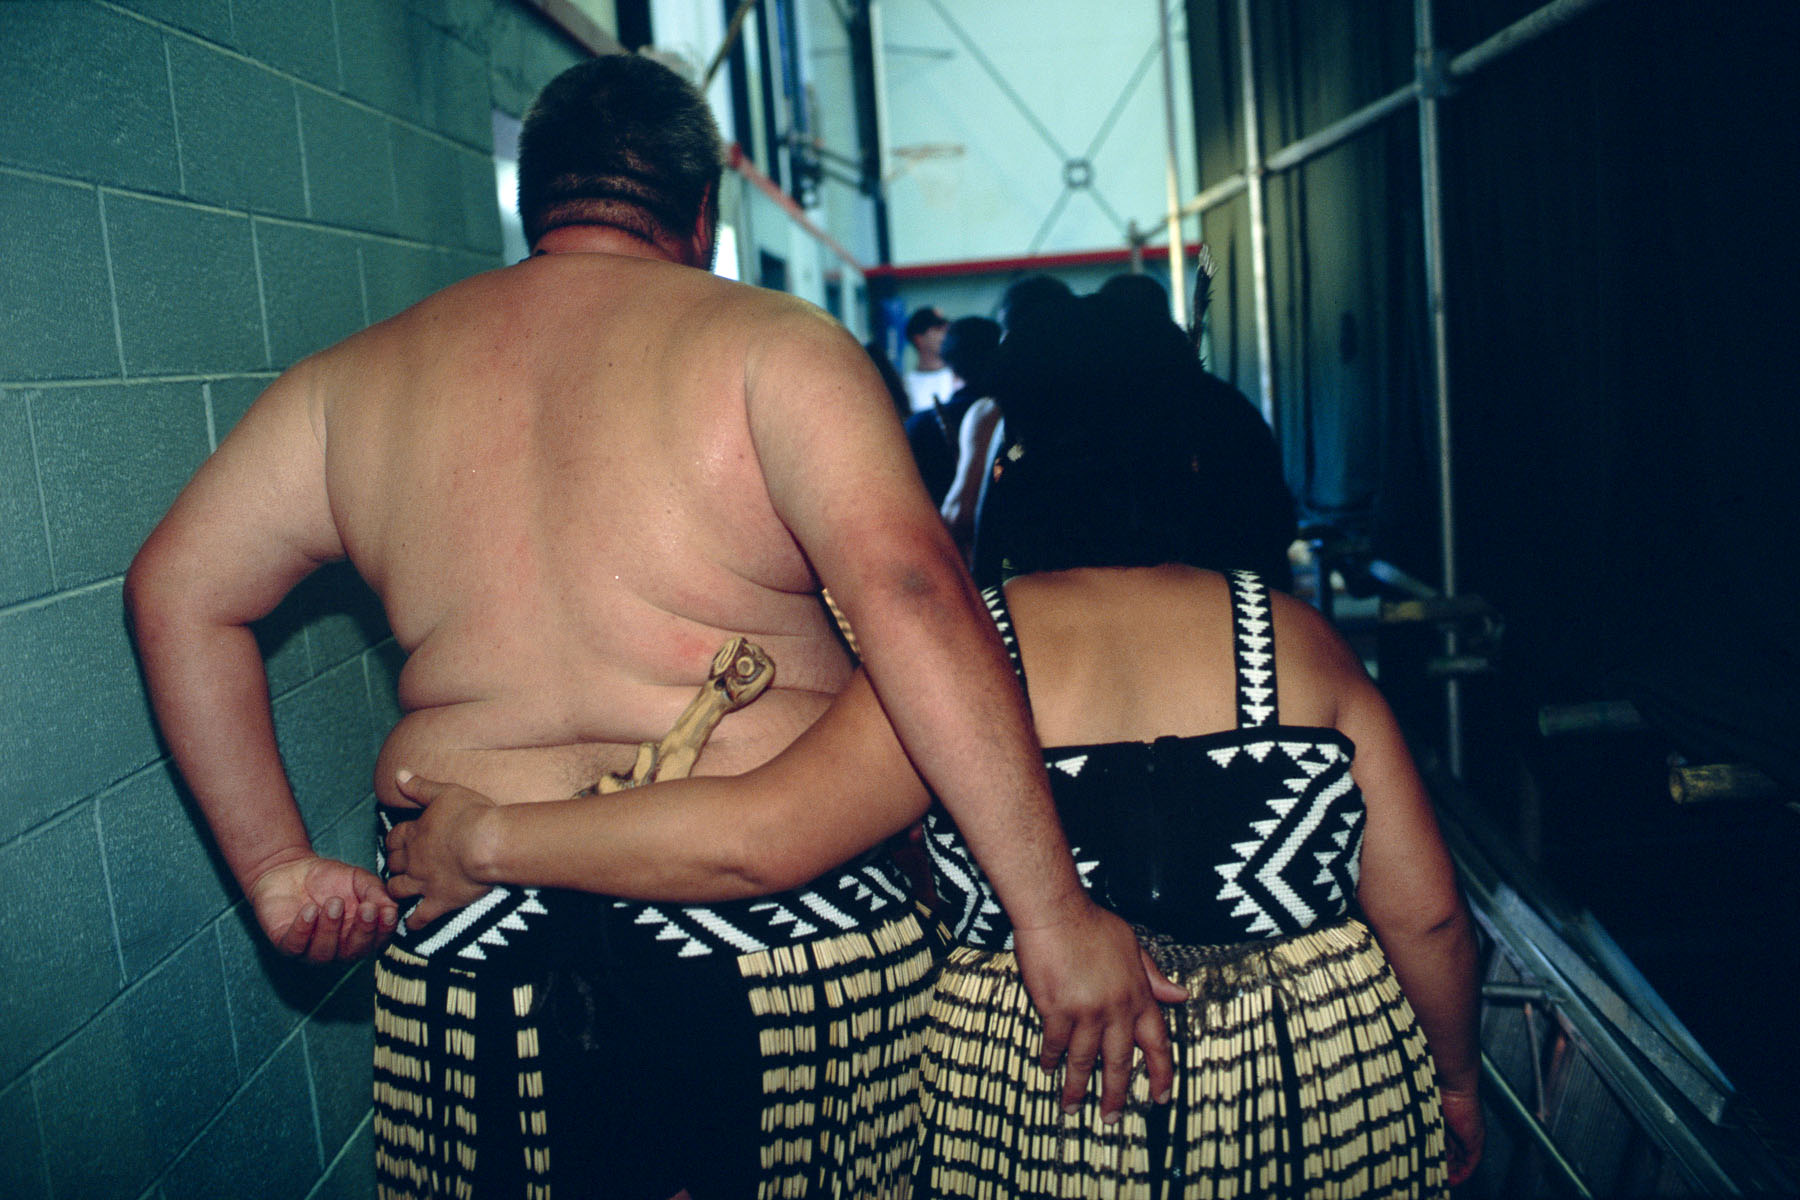 Haka performers attend the Kahungunu festival, a Maori culture folk arts festival in May 2000